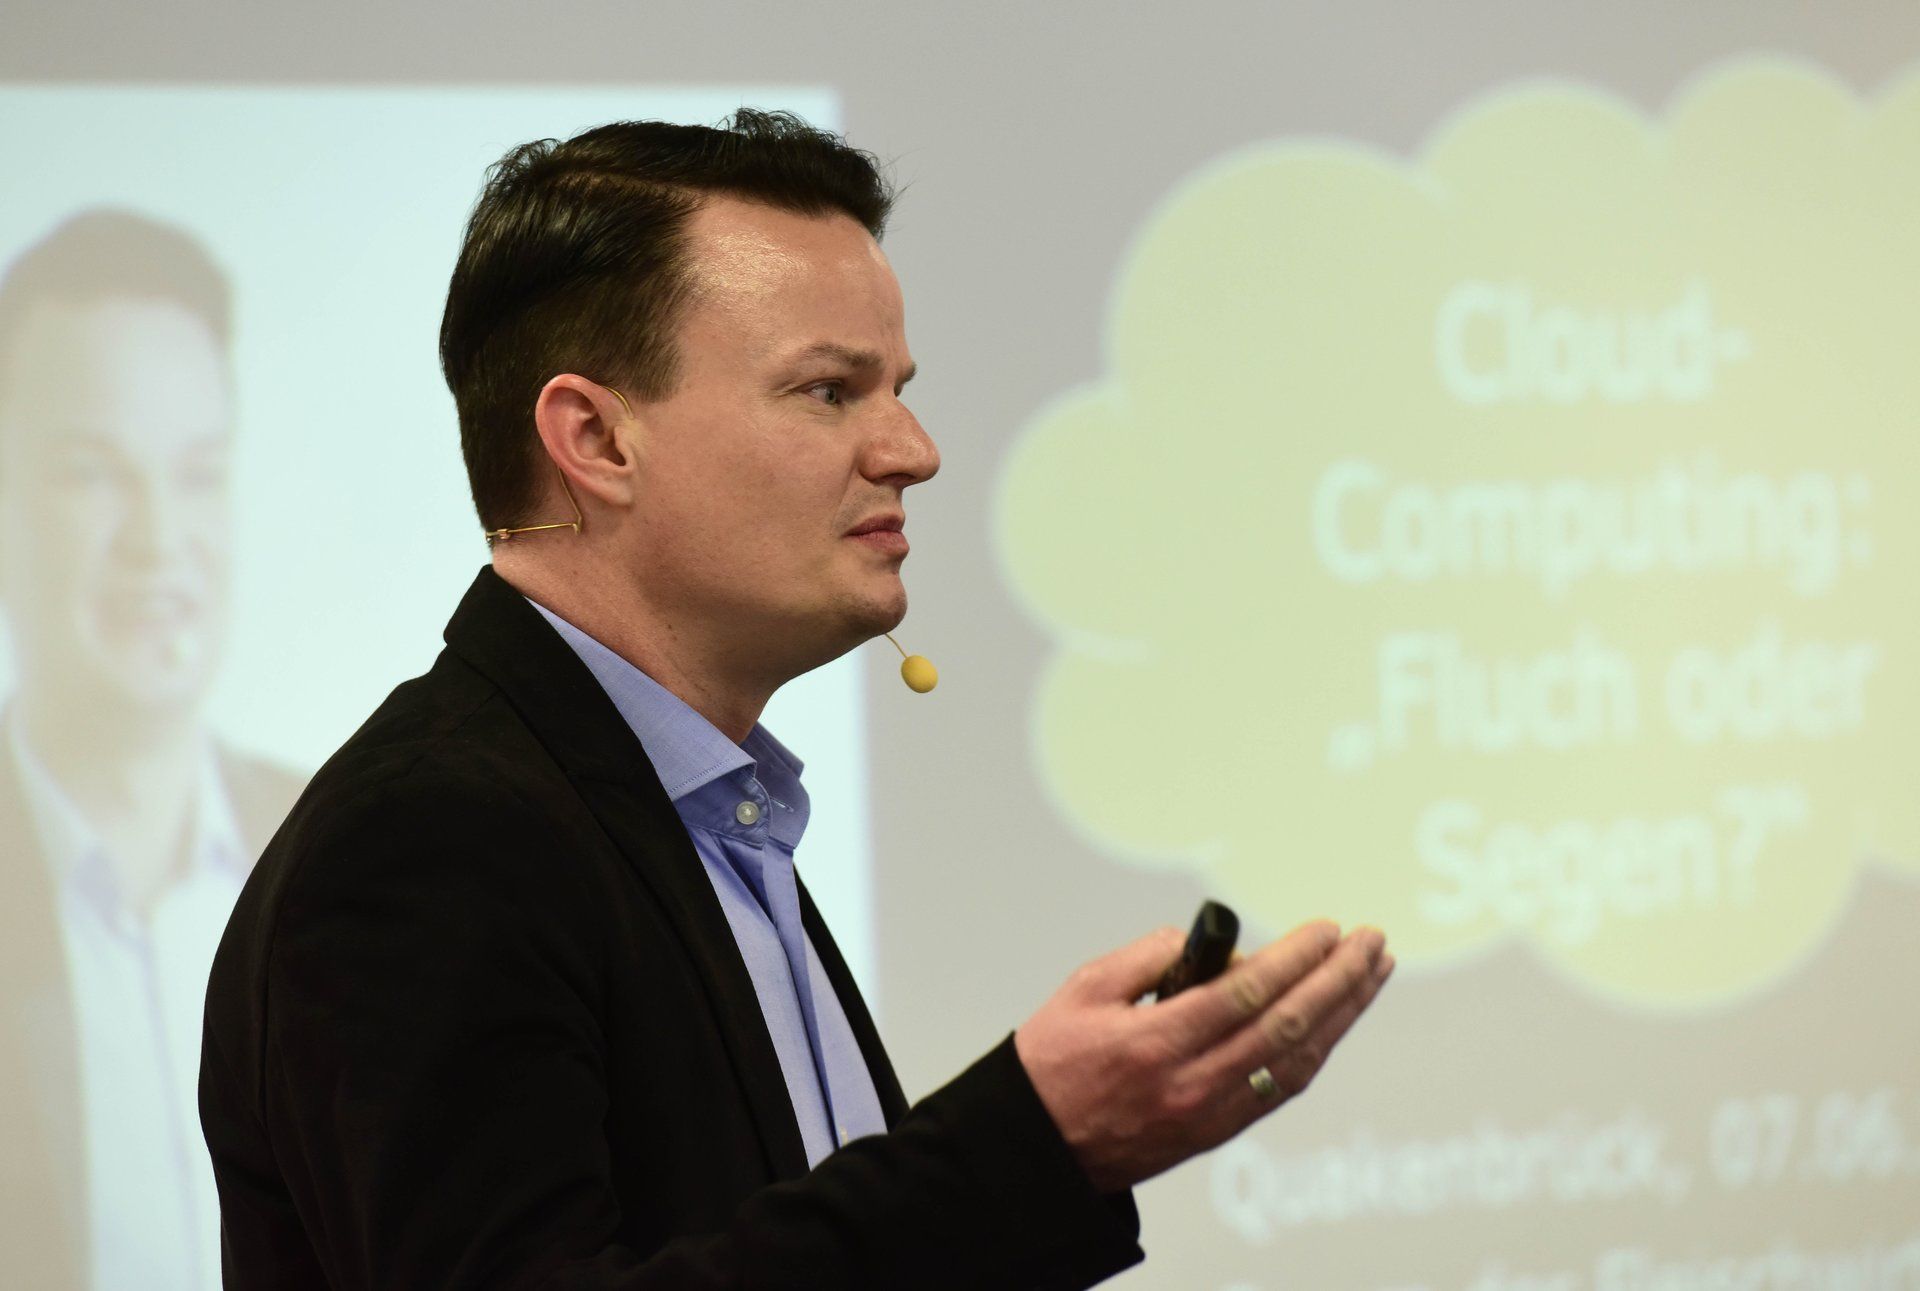 Florian-Kunze-Speaker-Business-Profi-vortrag-motiviation-digitalisierung-querdenken-workshop